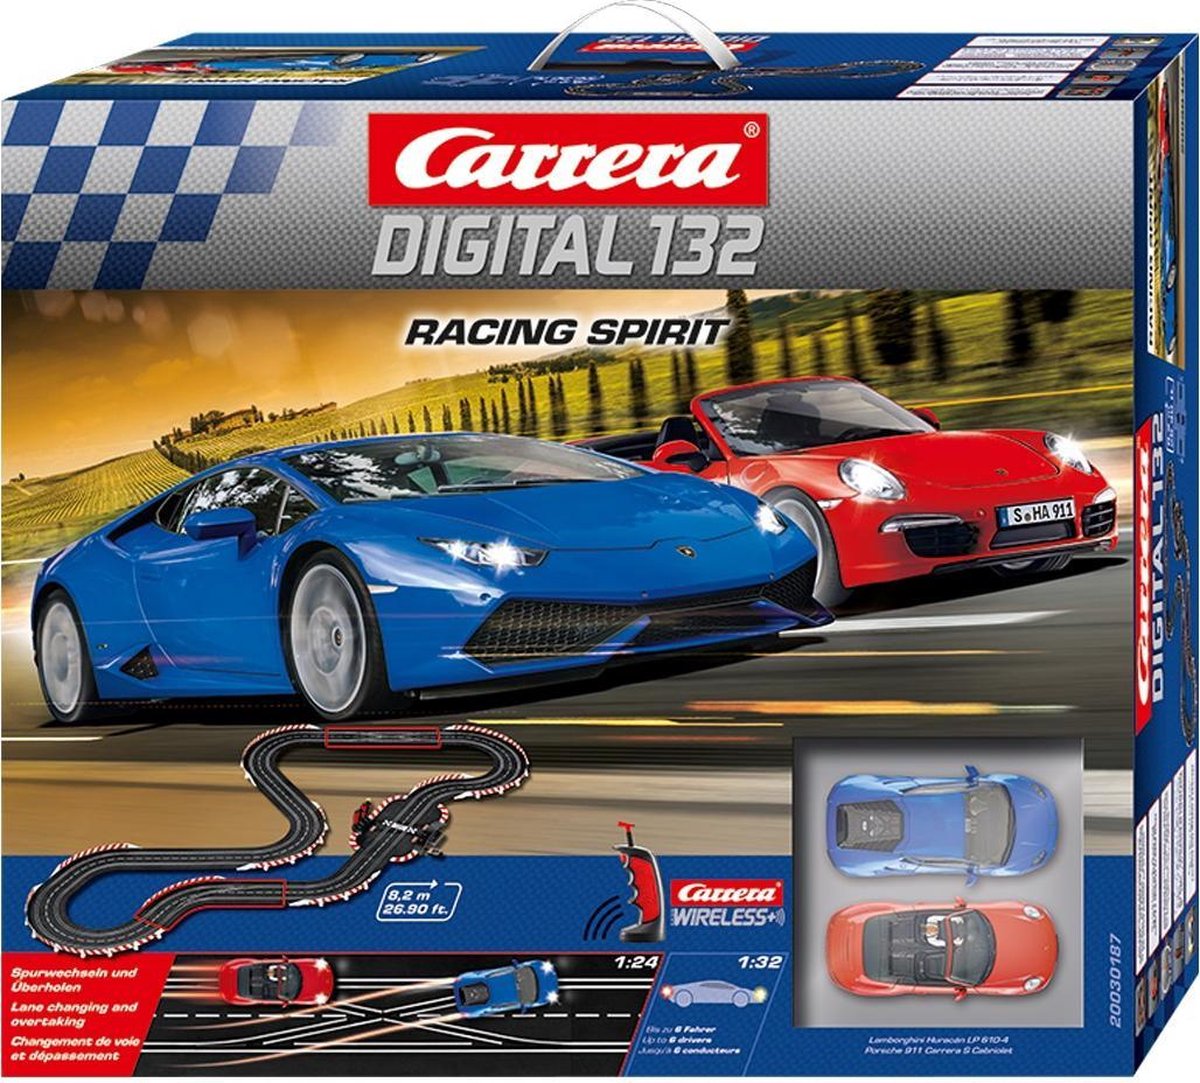 Carrera Digital 132 - Ruim aanbod bij